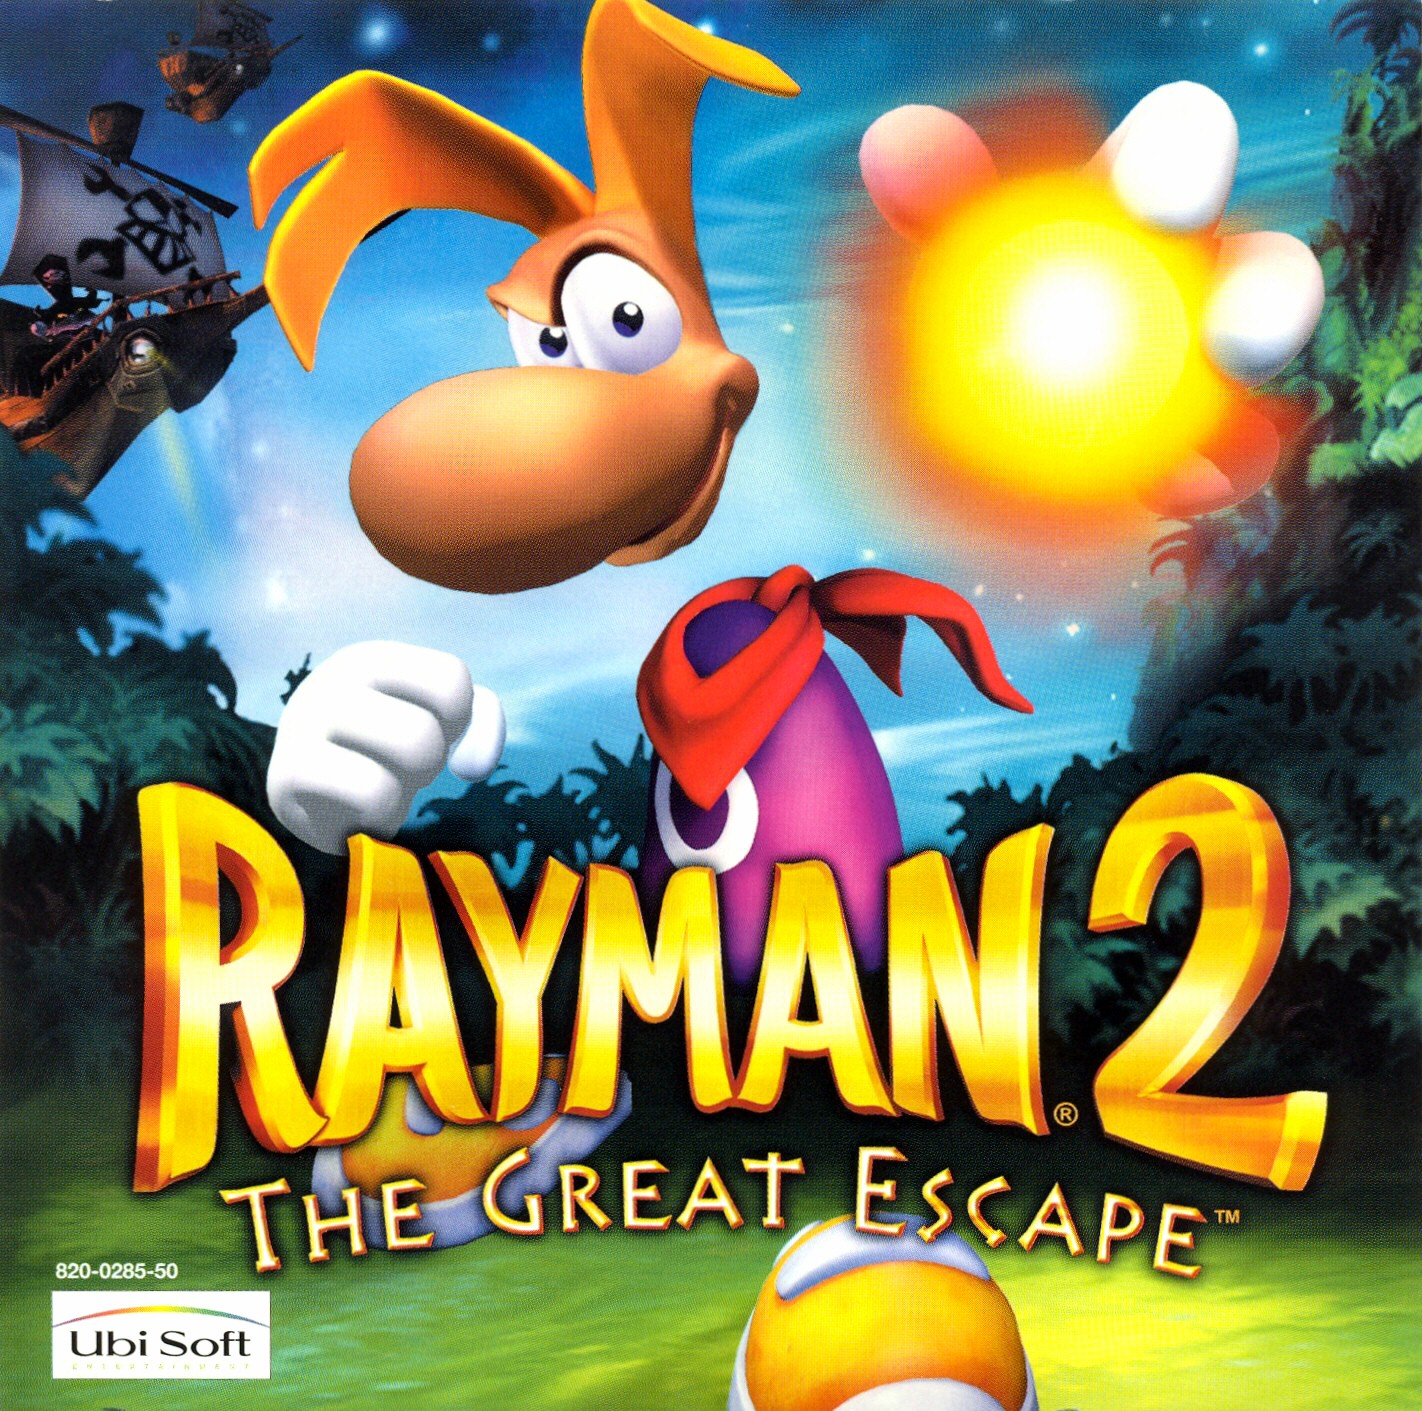 download rayman legends 2